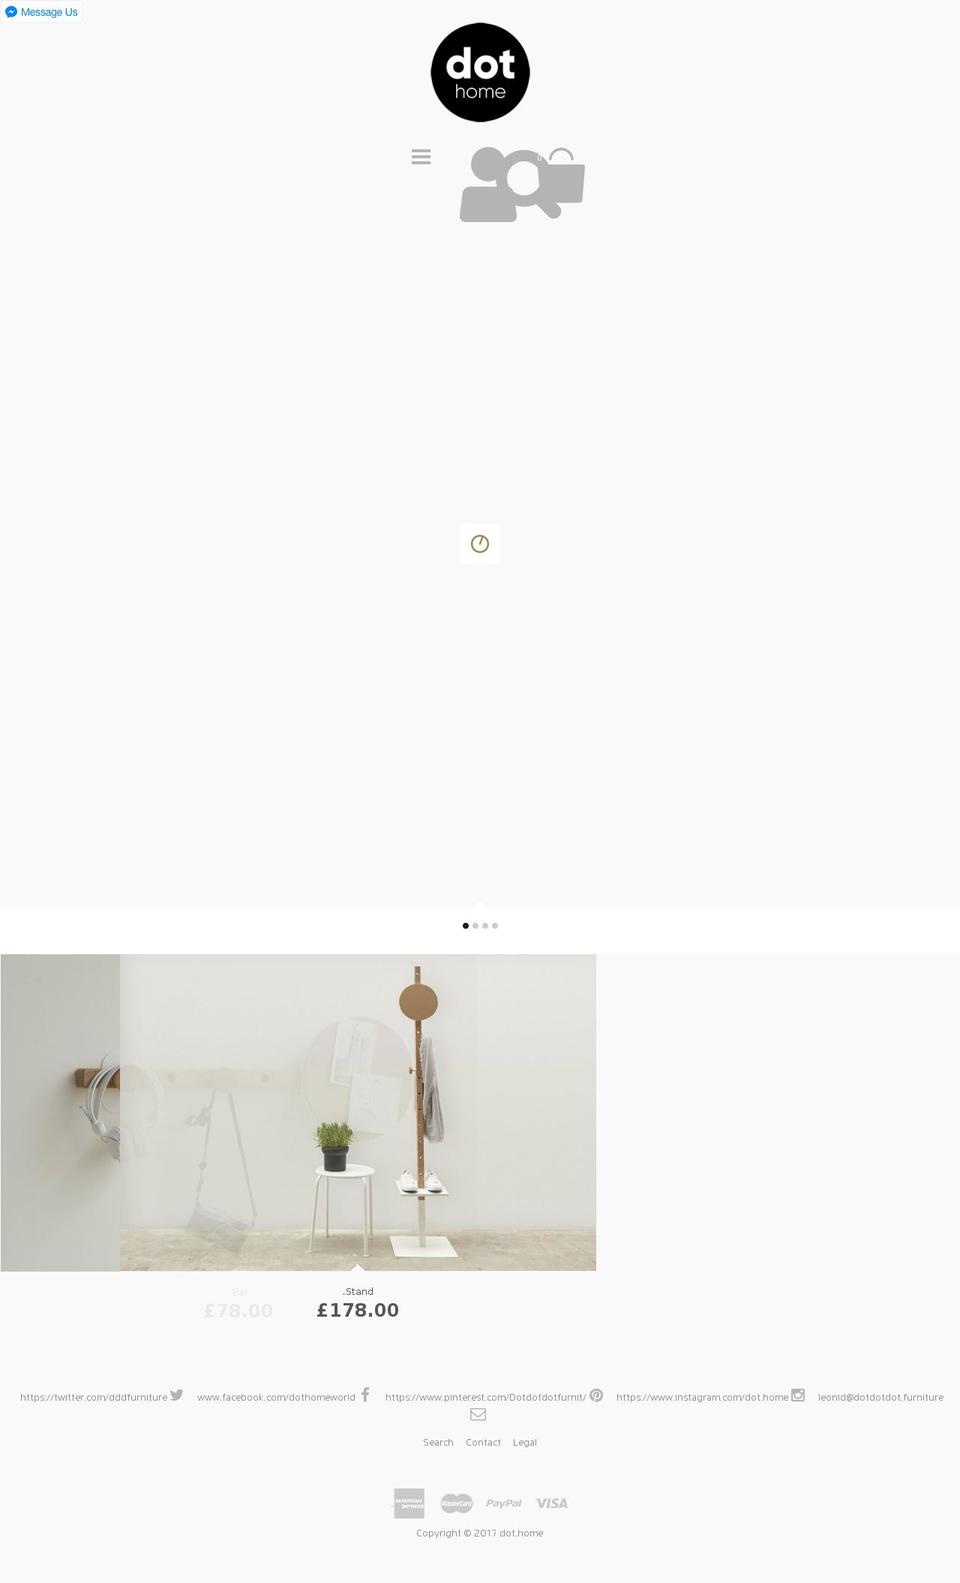 dot-home.co shopify website screenshot